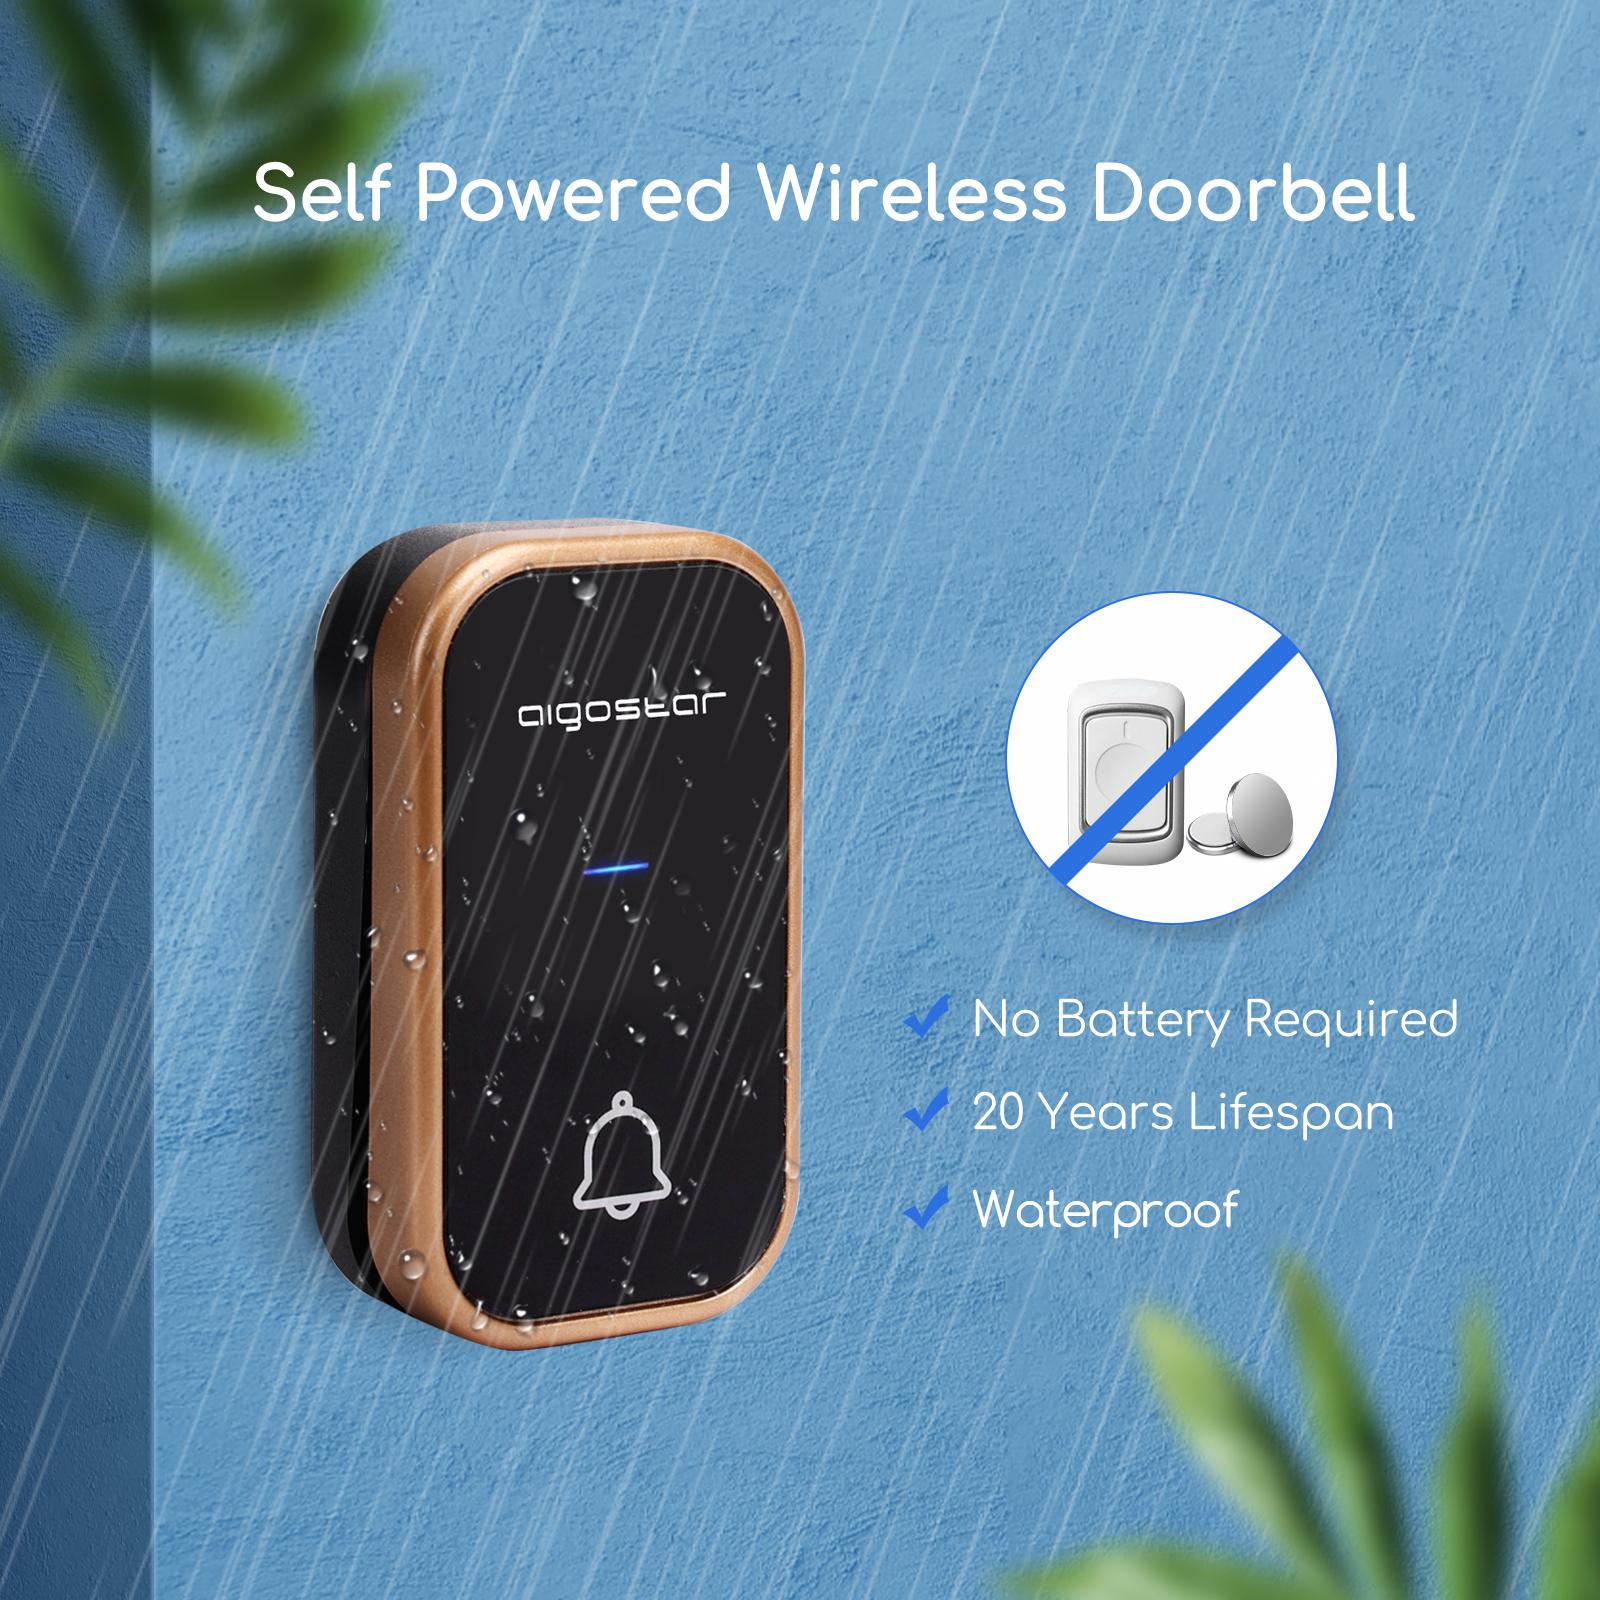 Self-powered wireless AC doorbell